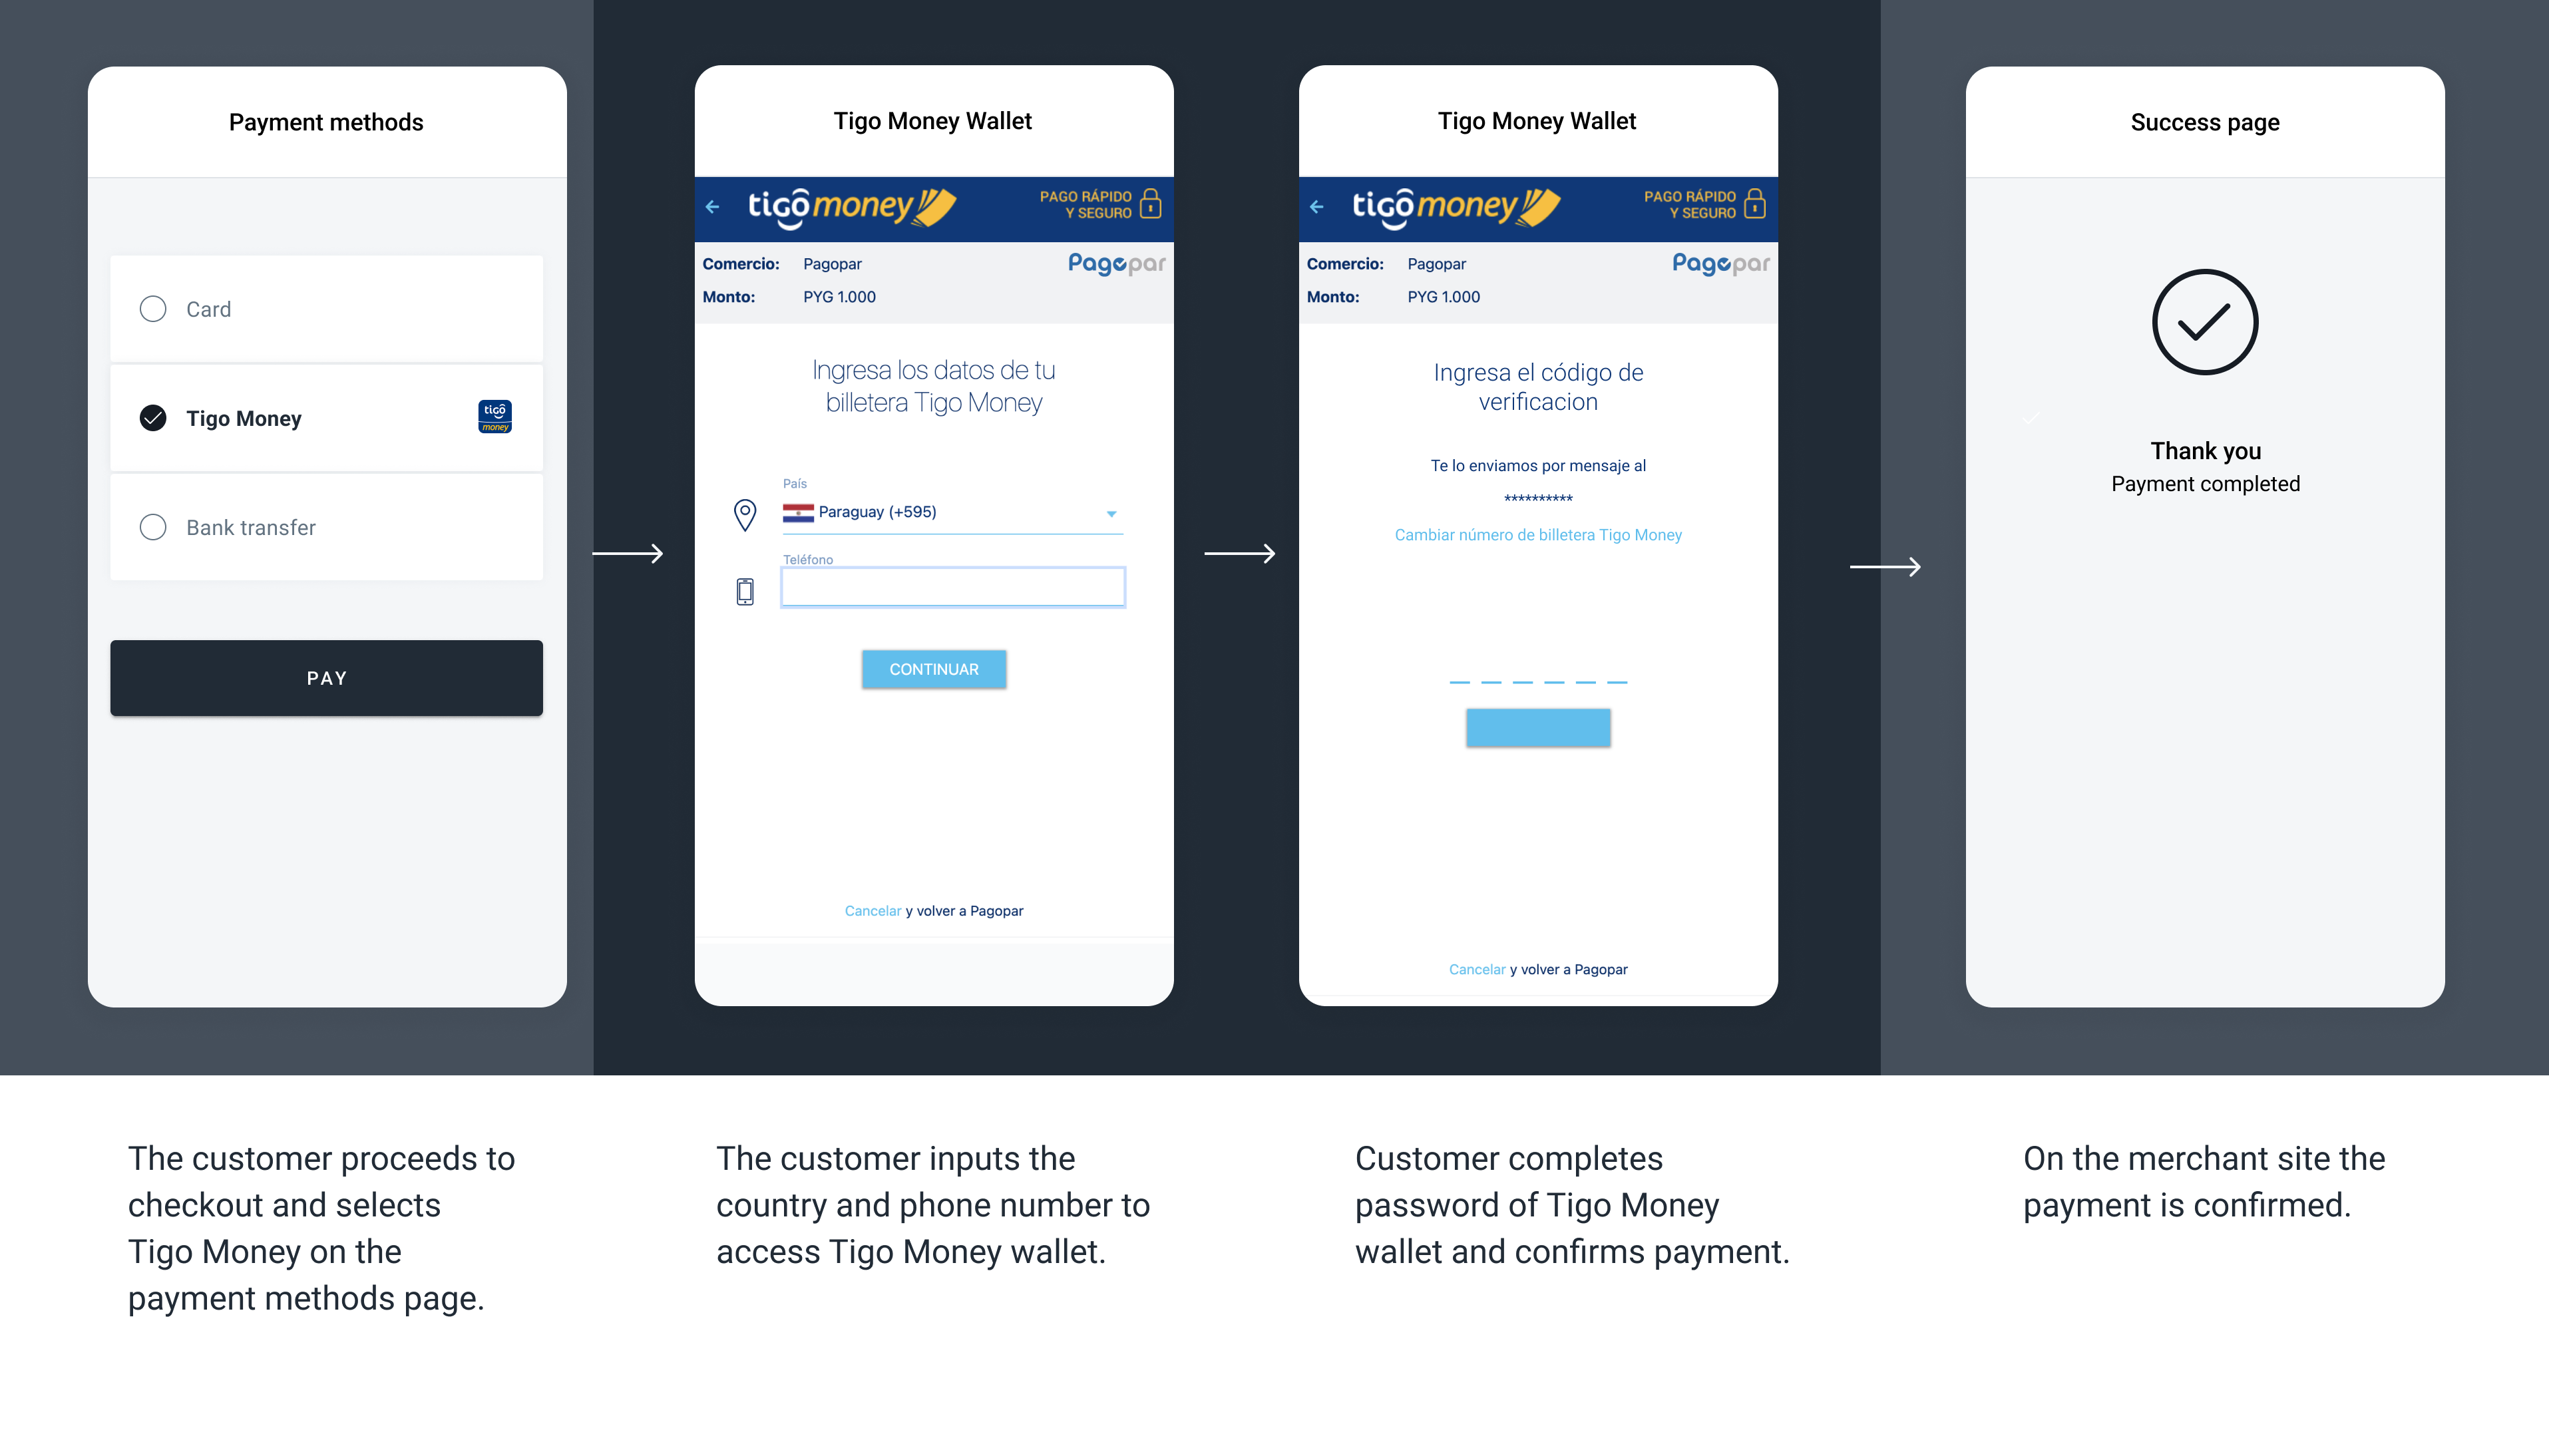 The screenshots illustrate a generic Tigo Money payment flow.